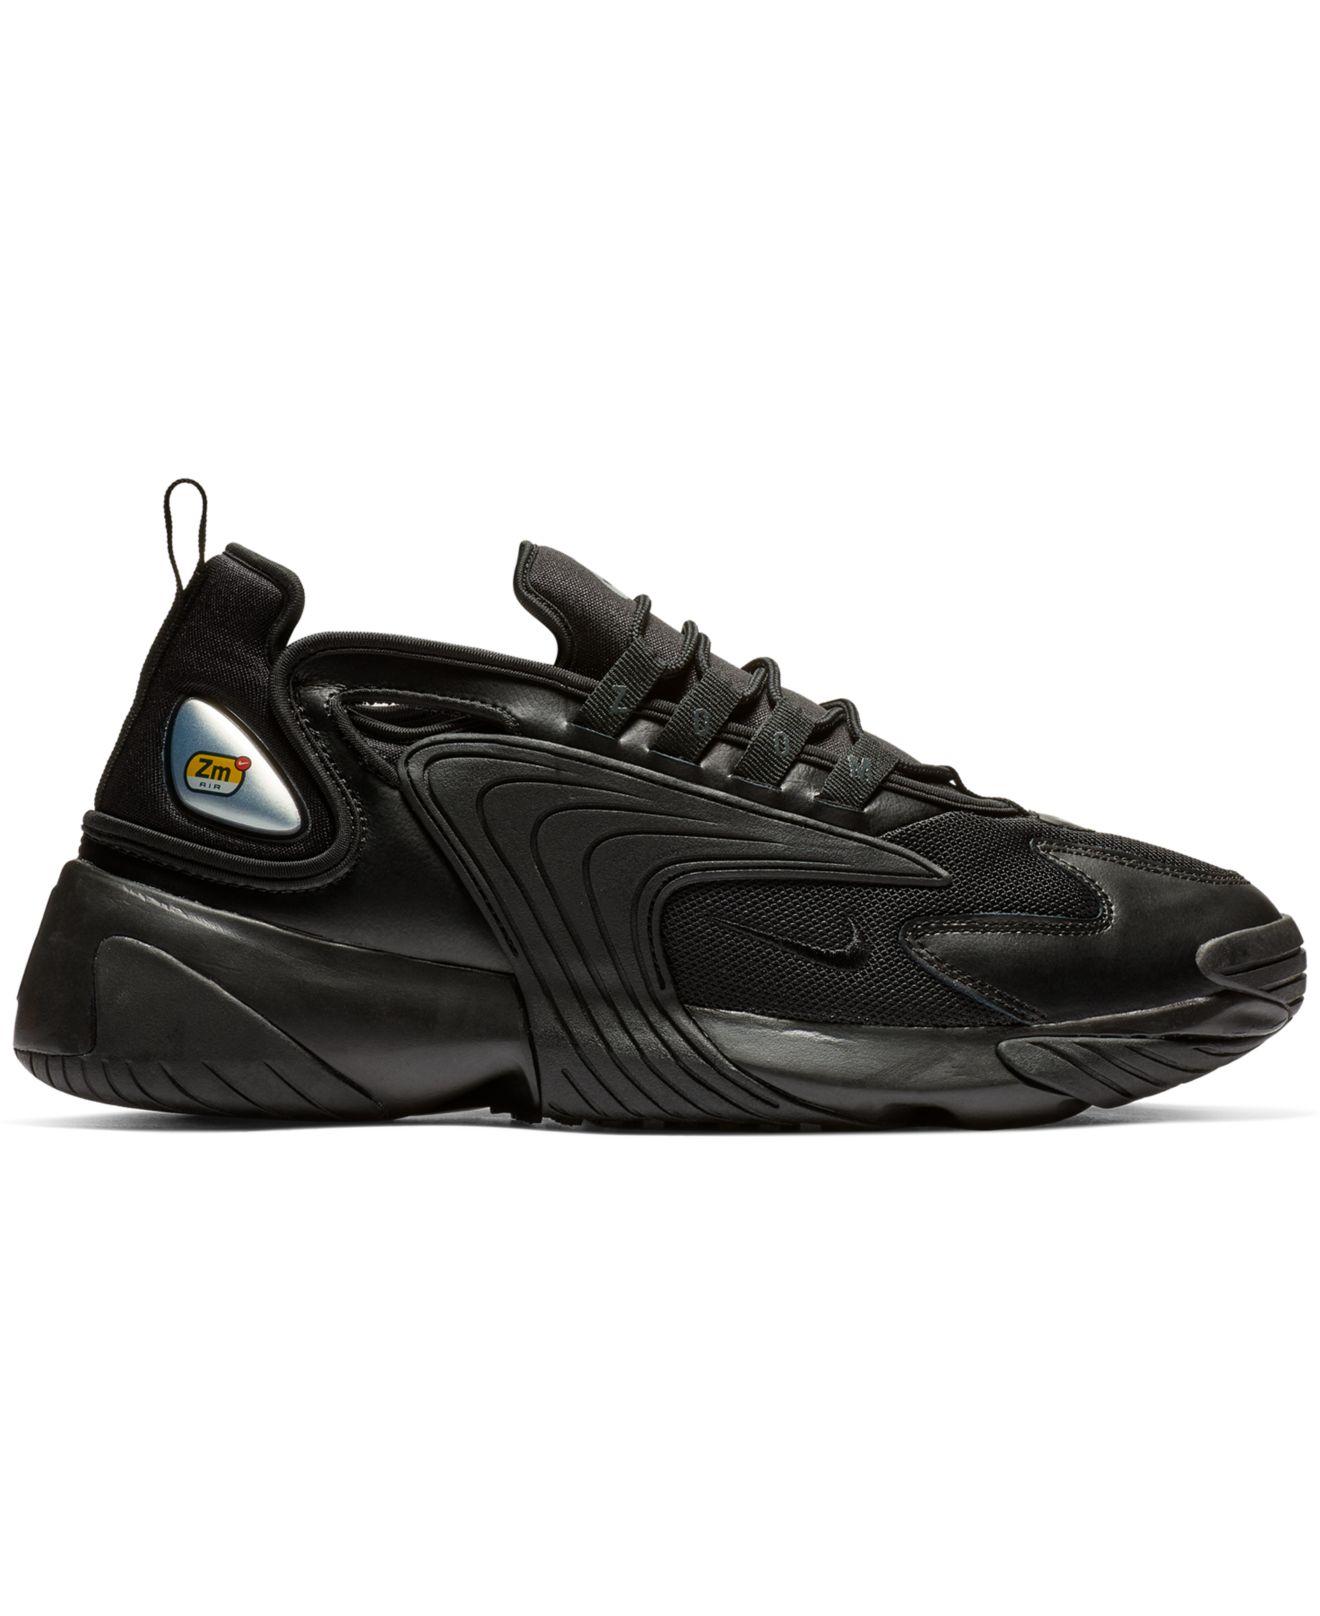 Nike Zoom 2k Shoe in Black/Black (Black) for Men - Lyst